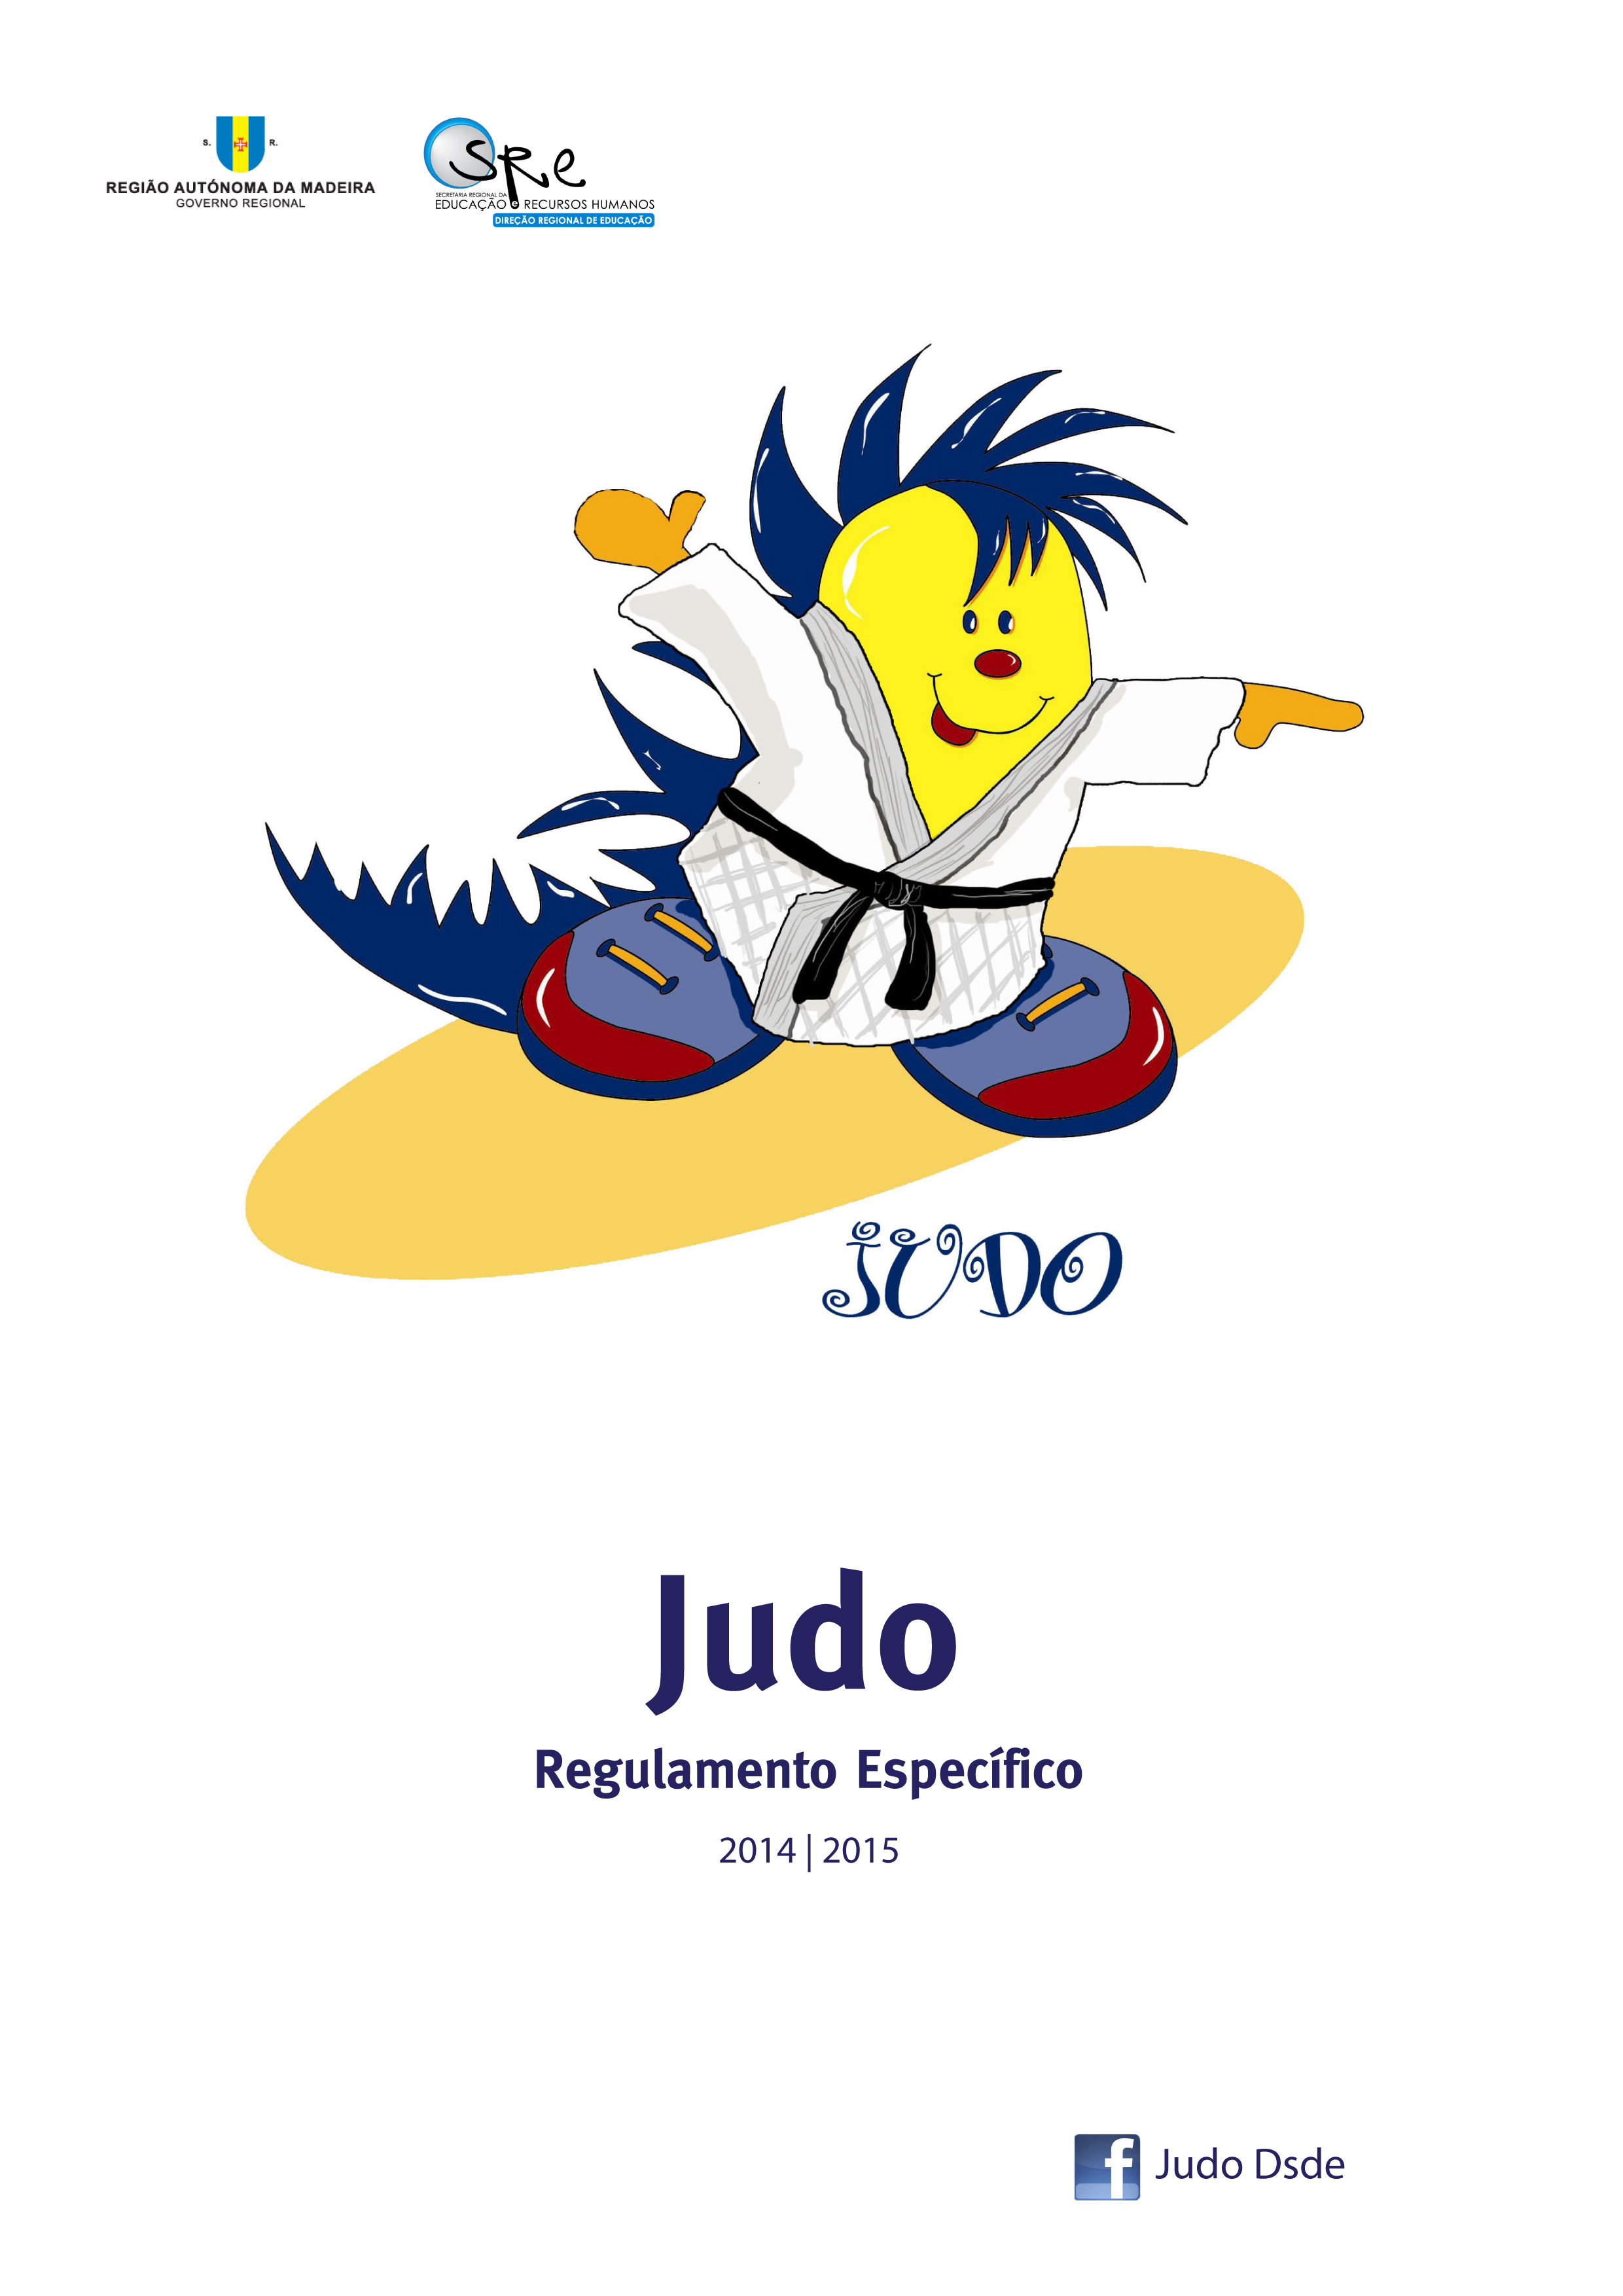 Regulamento Específico de Judo 2014/15